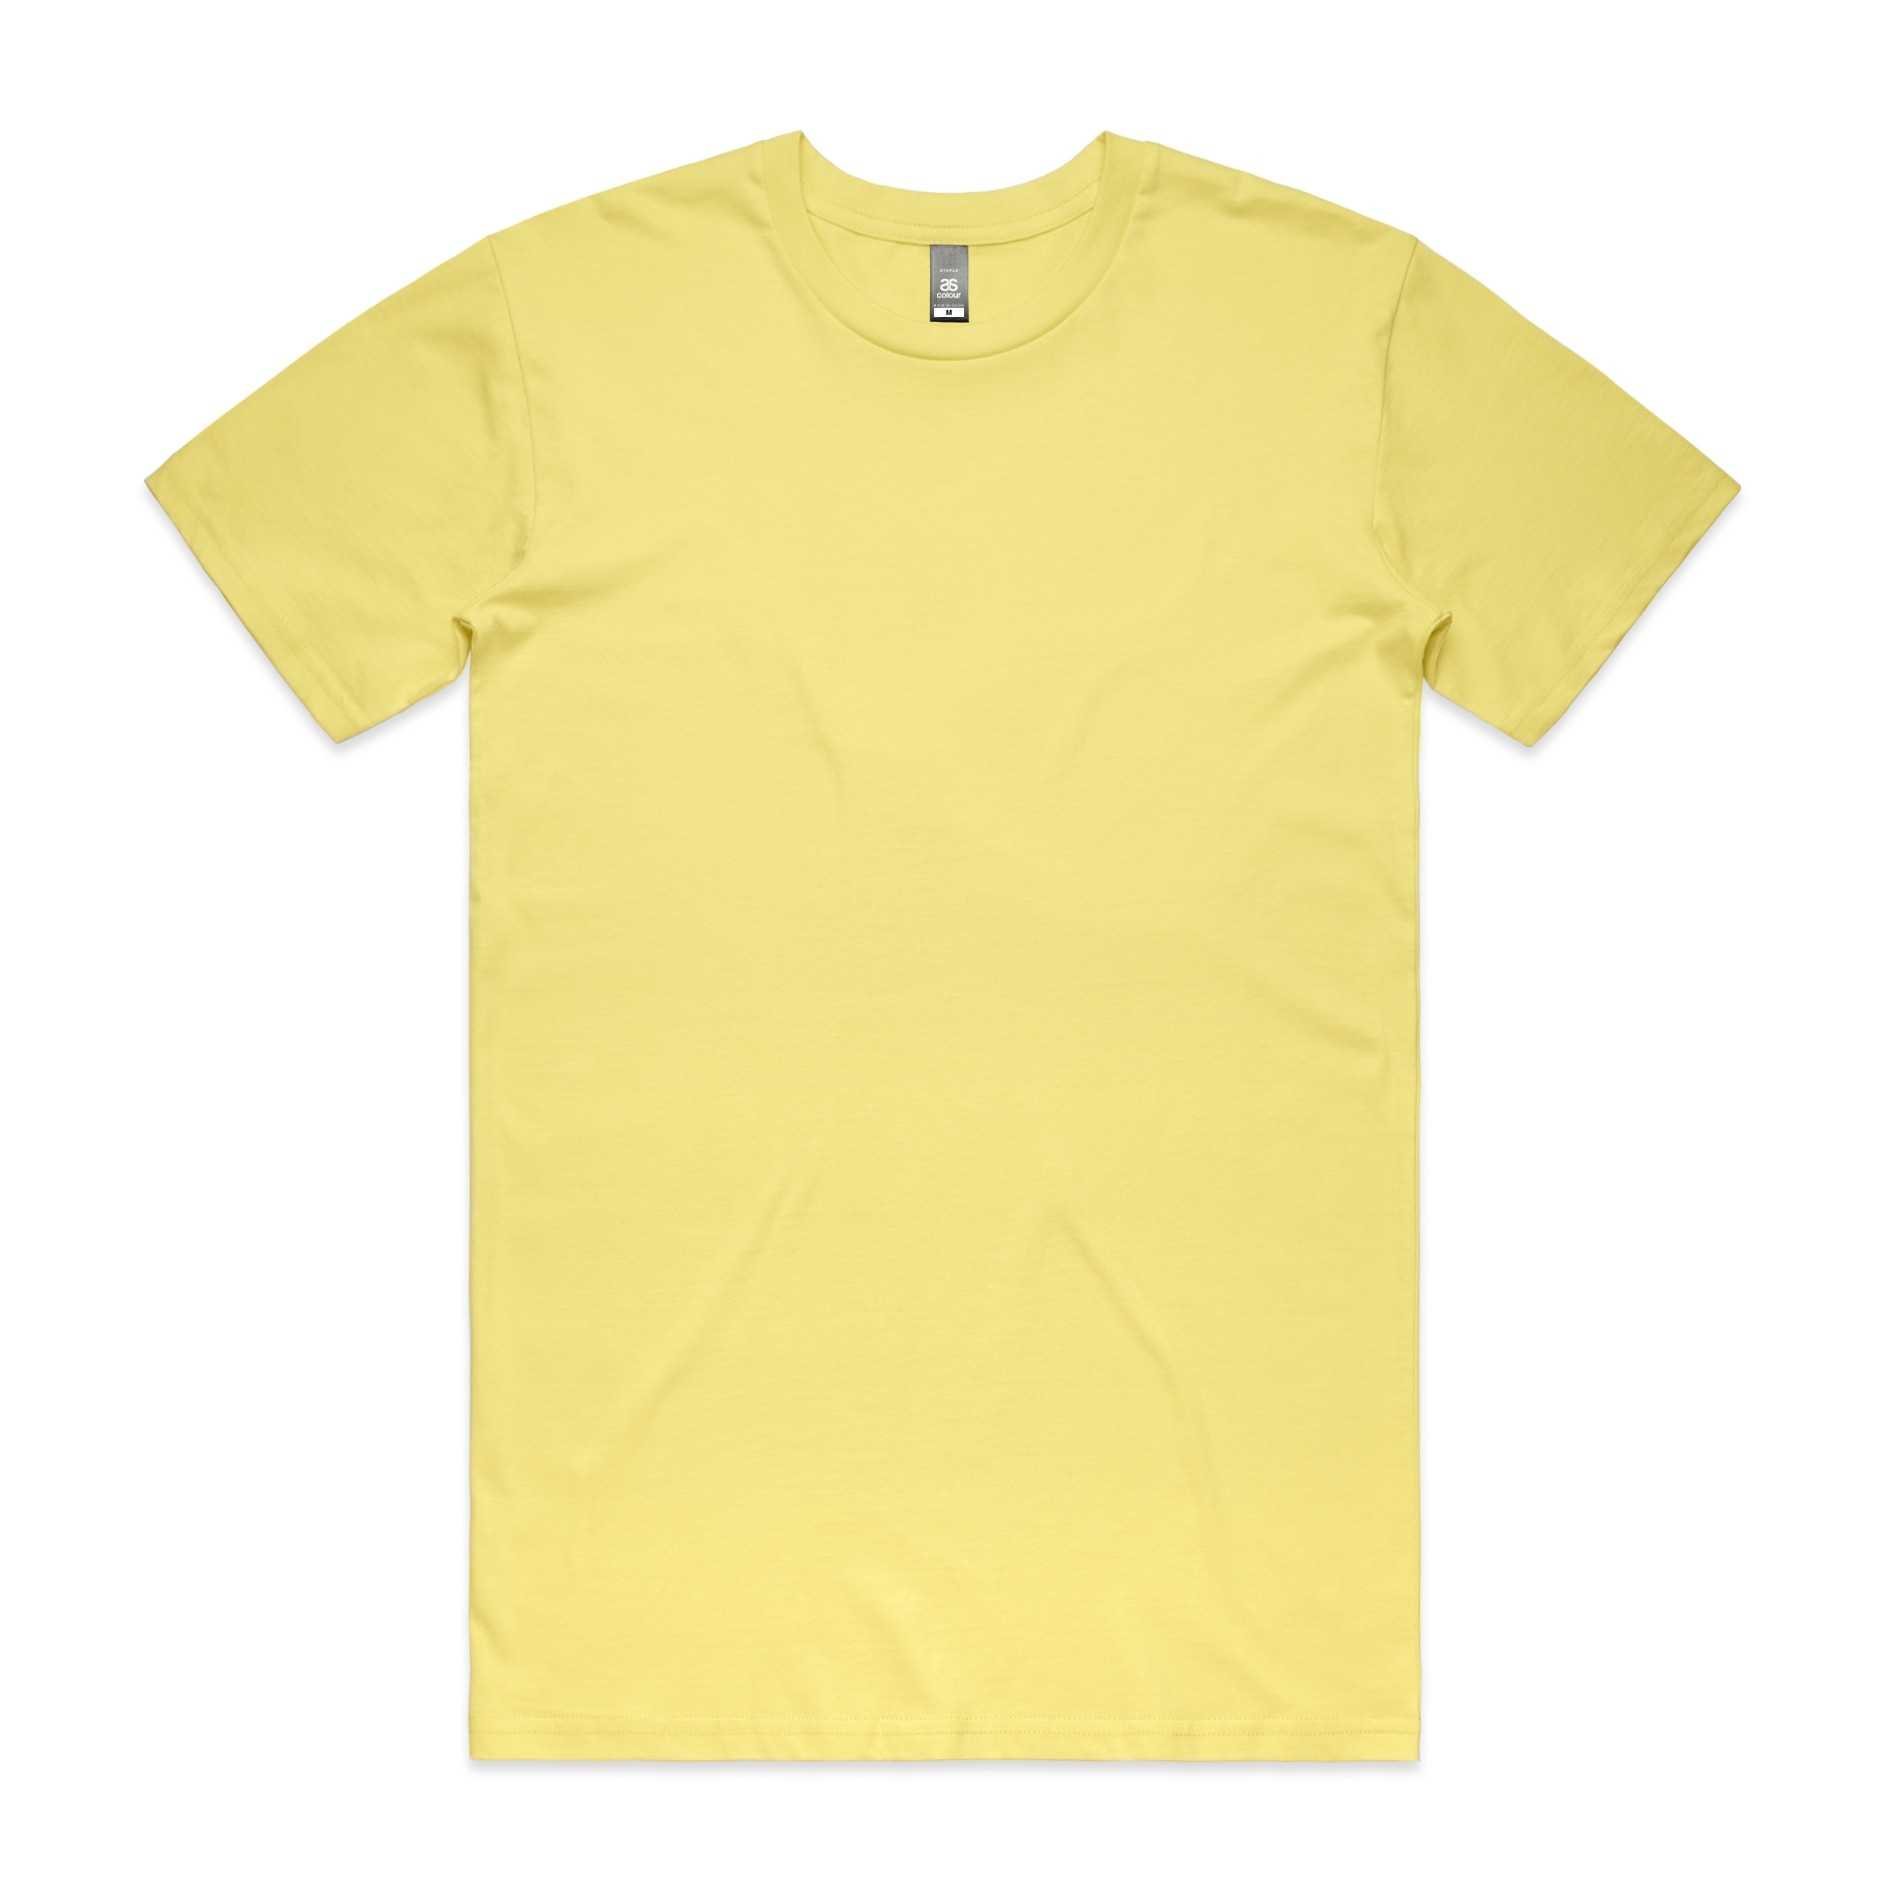 Printable Blank Tshirt Template – Nils Stucki Kieferorthopäde With Regard To Printable Blank Tshirt Template